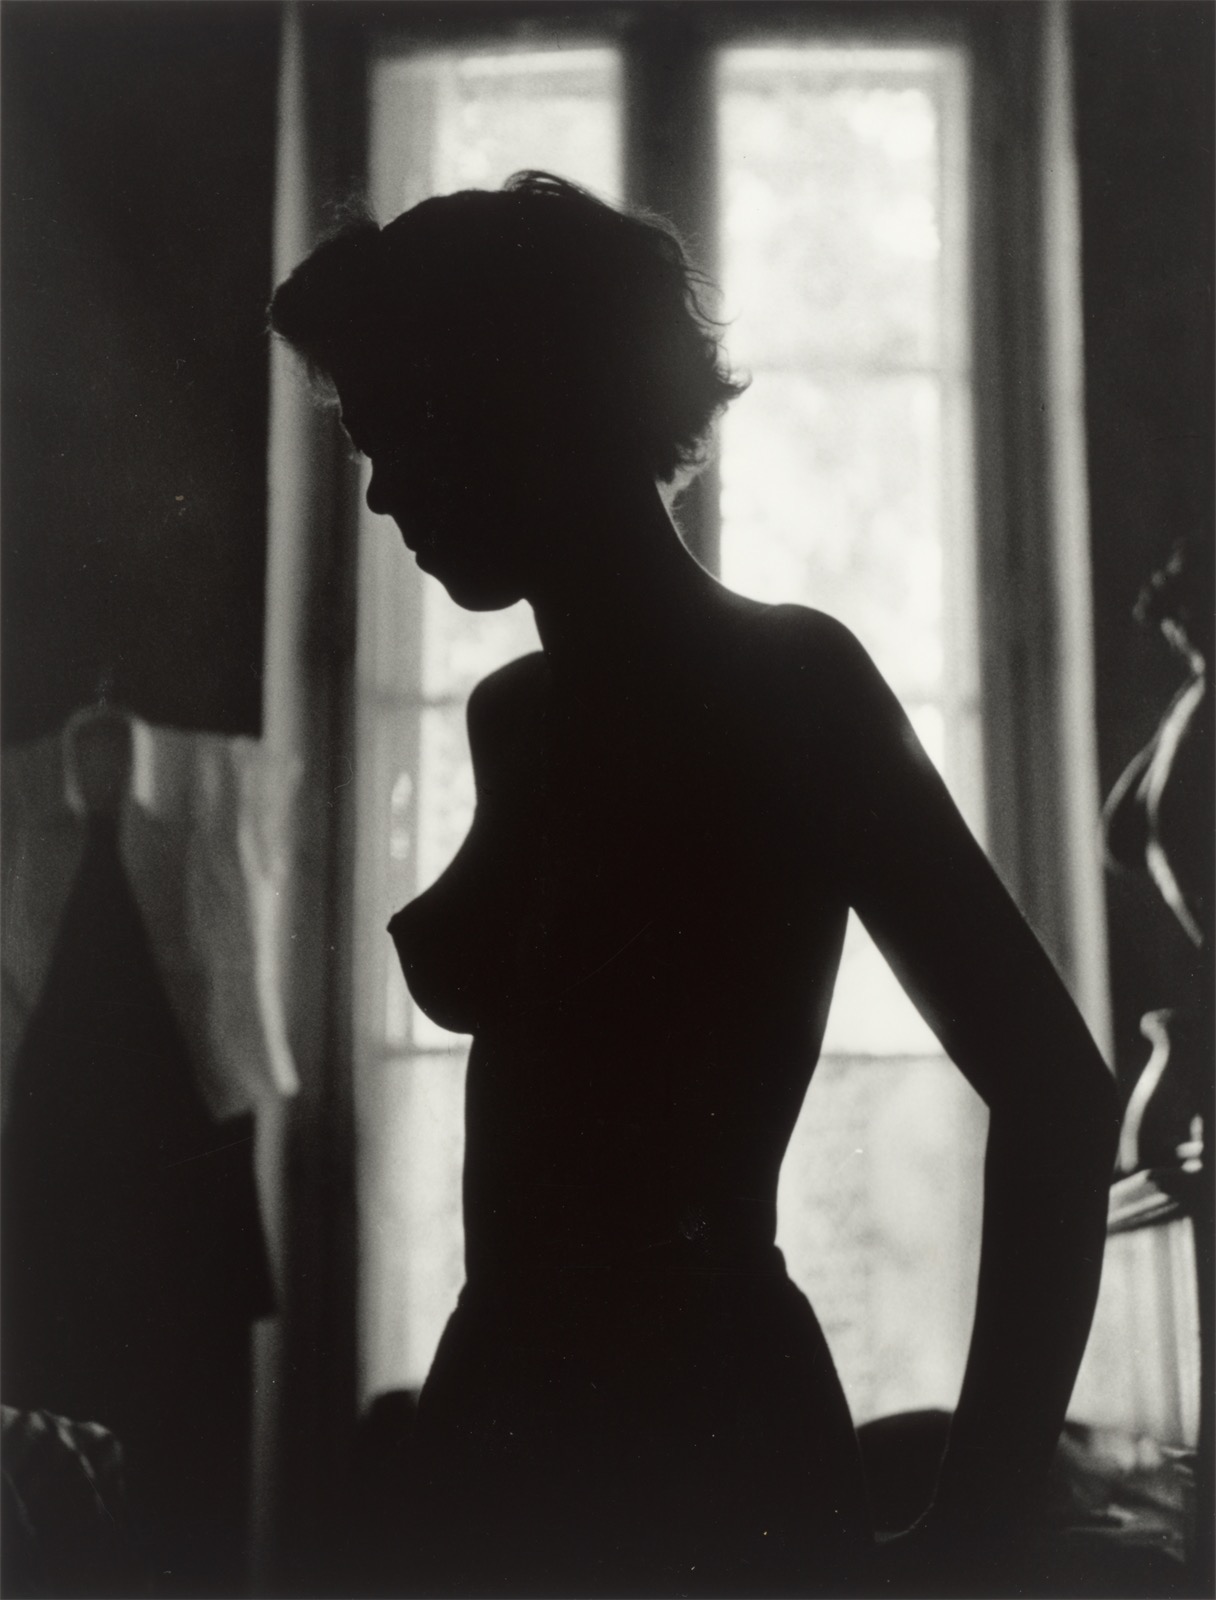 René Groebli. # 526, from the series ”Das Auge der Liebe”, Paris. 1952